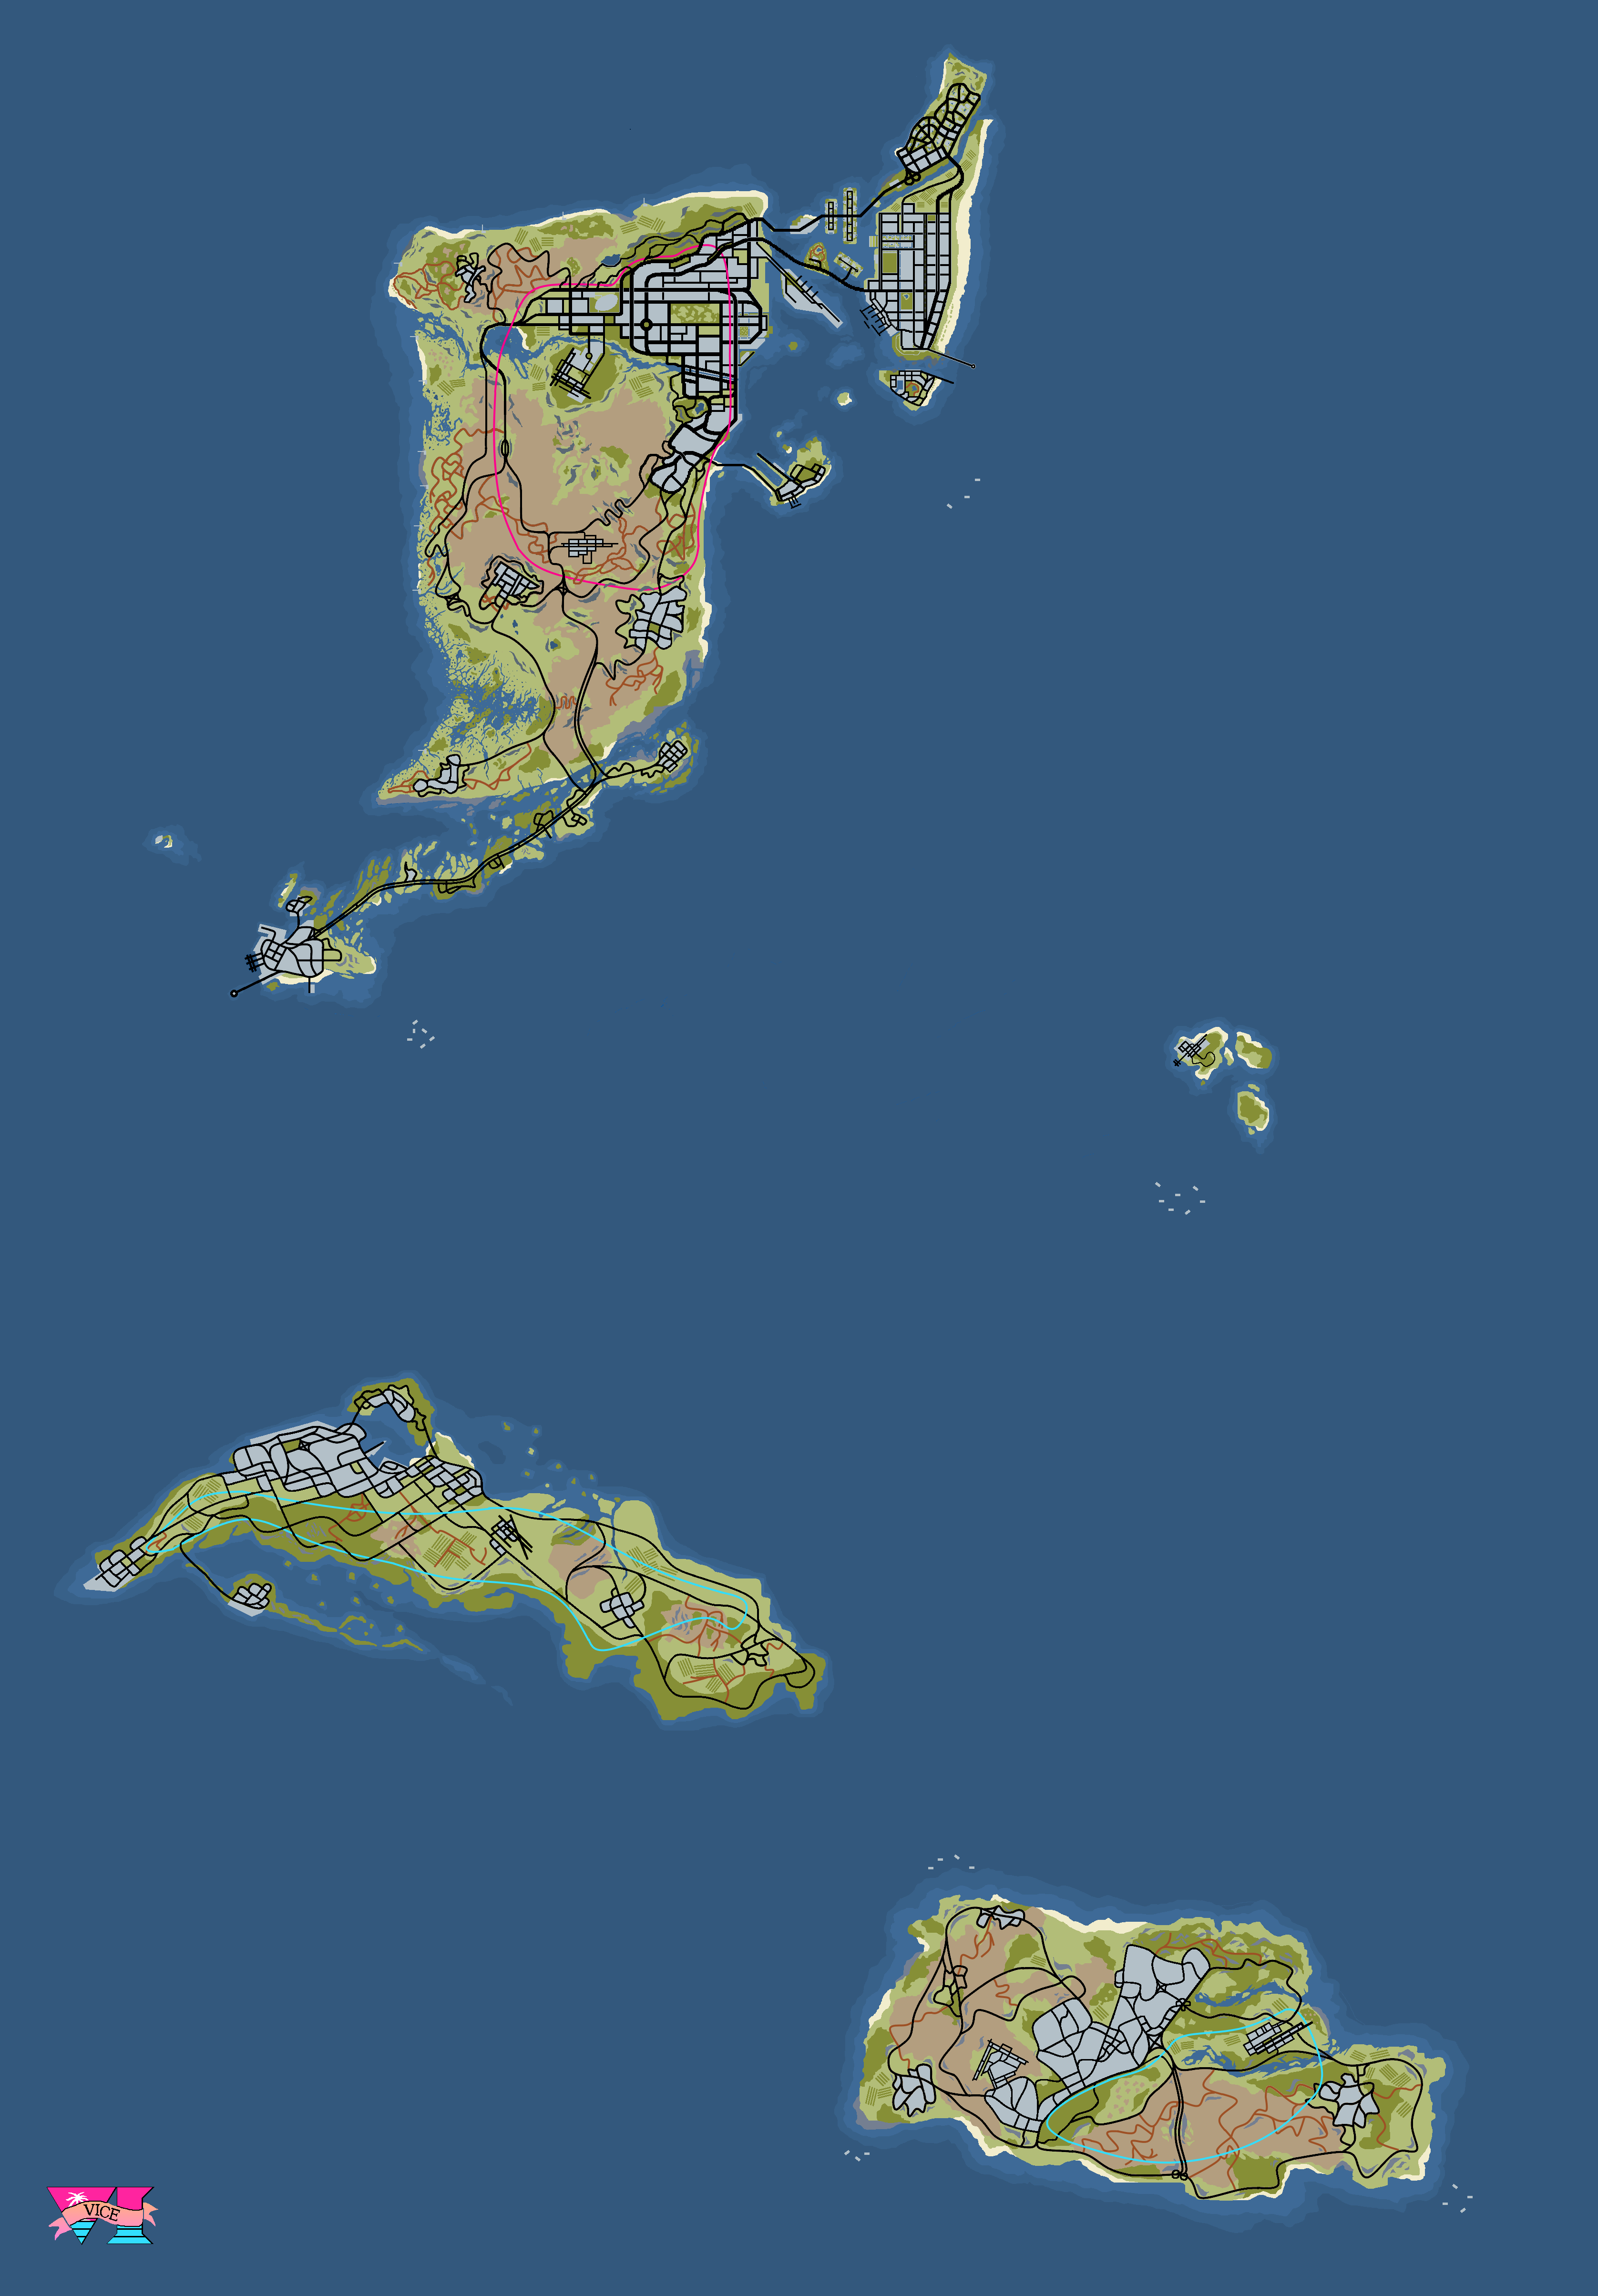 GTA 6. Grand Theft Auto VI: Vice City Map 1/4 by avatar-sd on DeviantArt